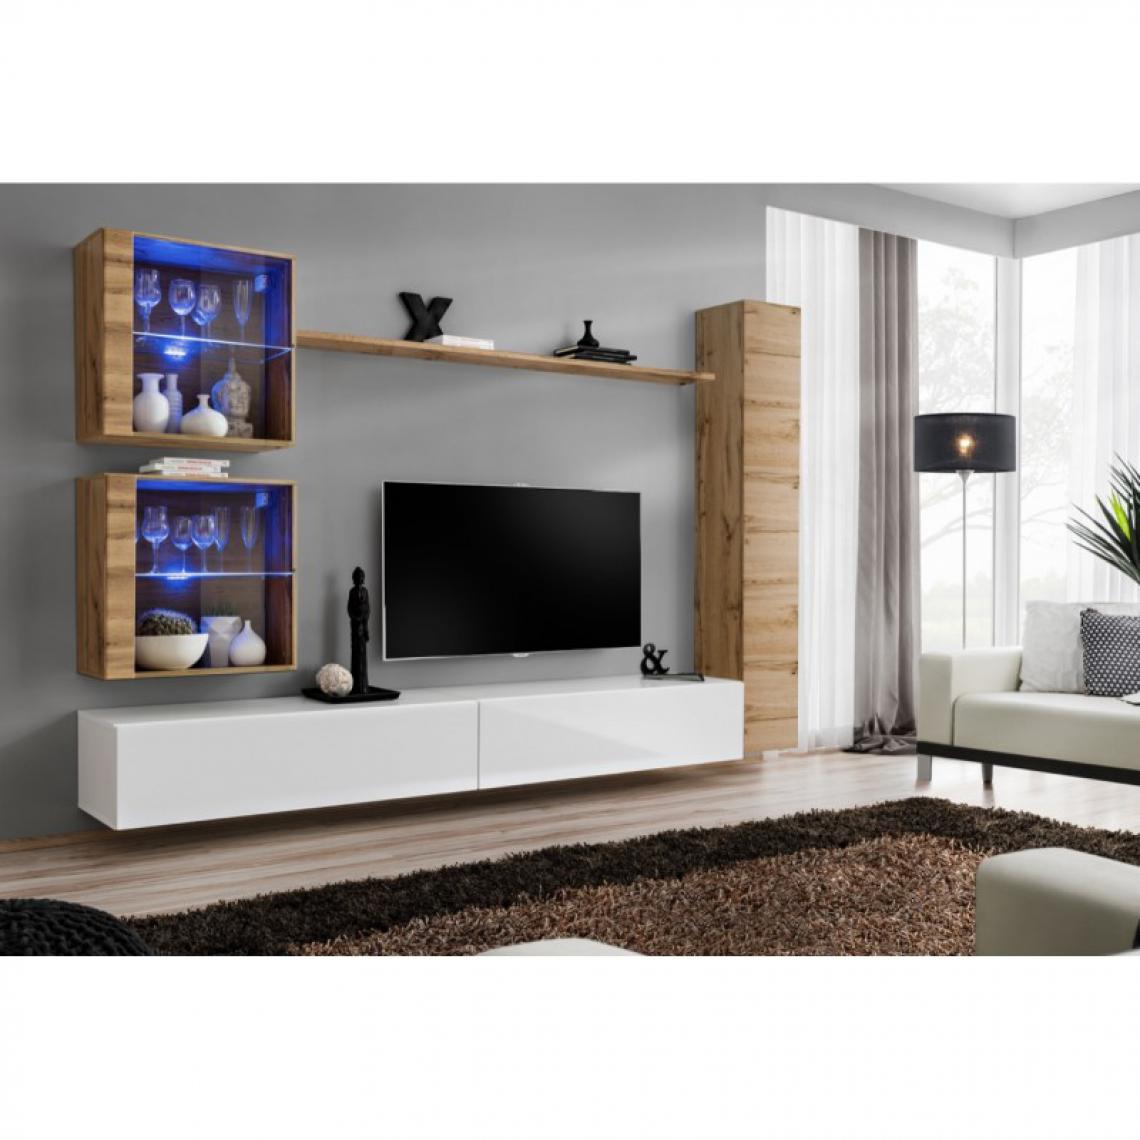 Ac-Deco - Meuble TV Mural Design Switch XVIII 280cm Blanc & Naturel - Meubles TV, Hi-Fi